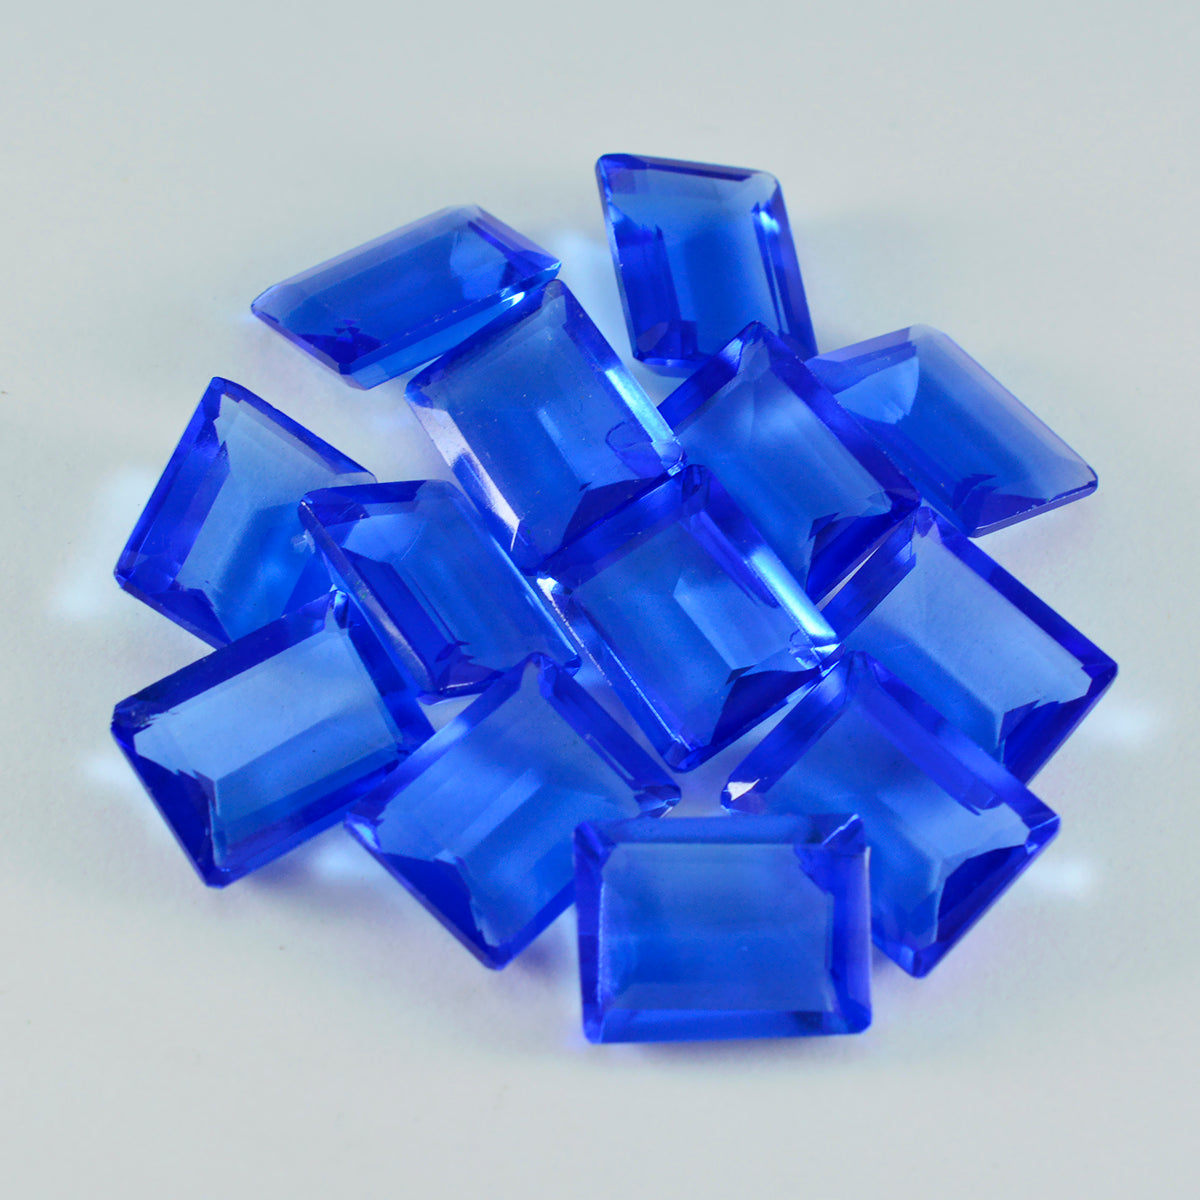 riyogems 1 st blå safir cz fasetterad 10x12 mm oktagonform härlig kvalitetspärla